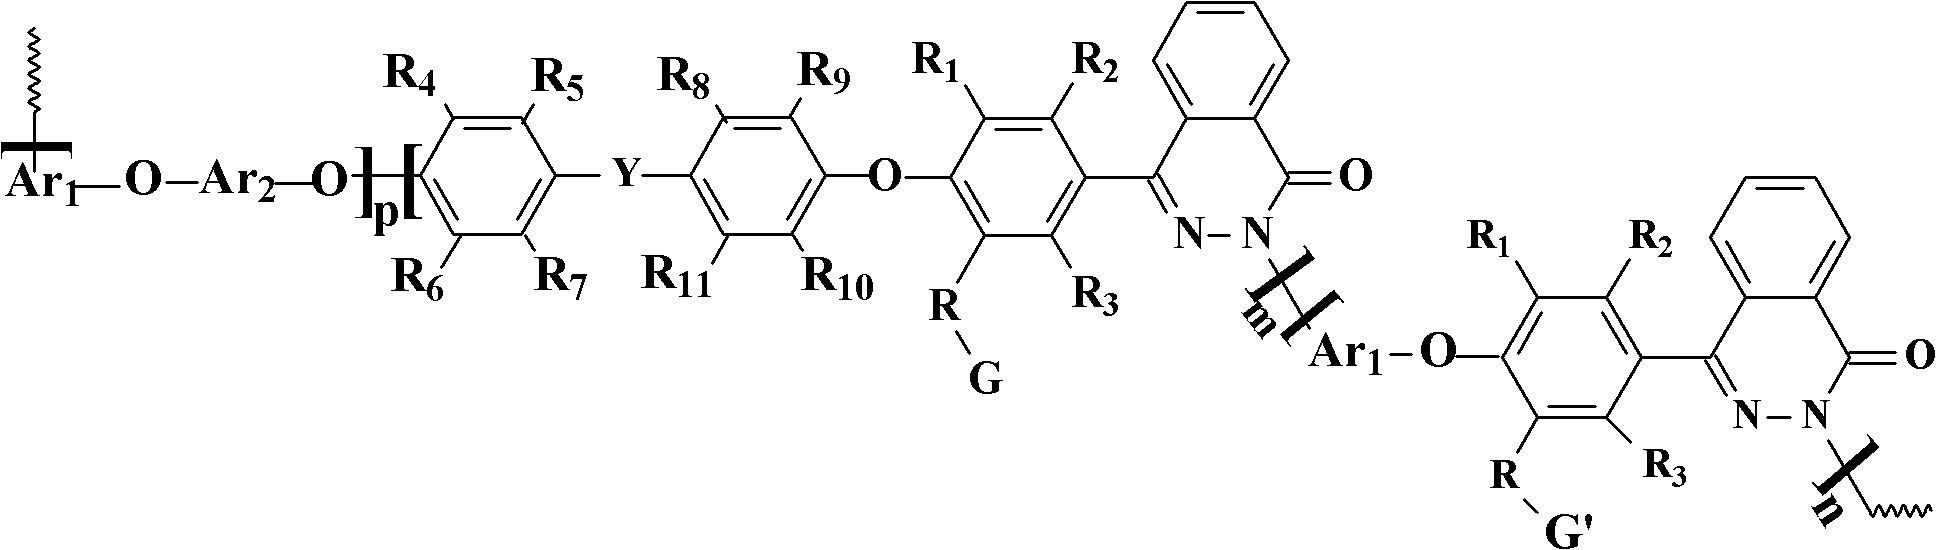 Crosslinked heterocyclic polyarylether alkaline electrolyte membrane and preparation method thereof